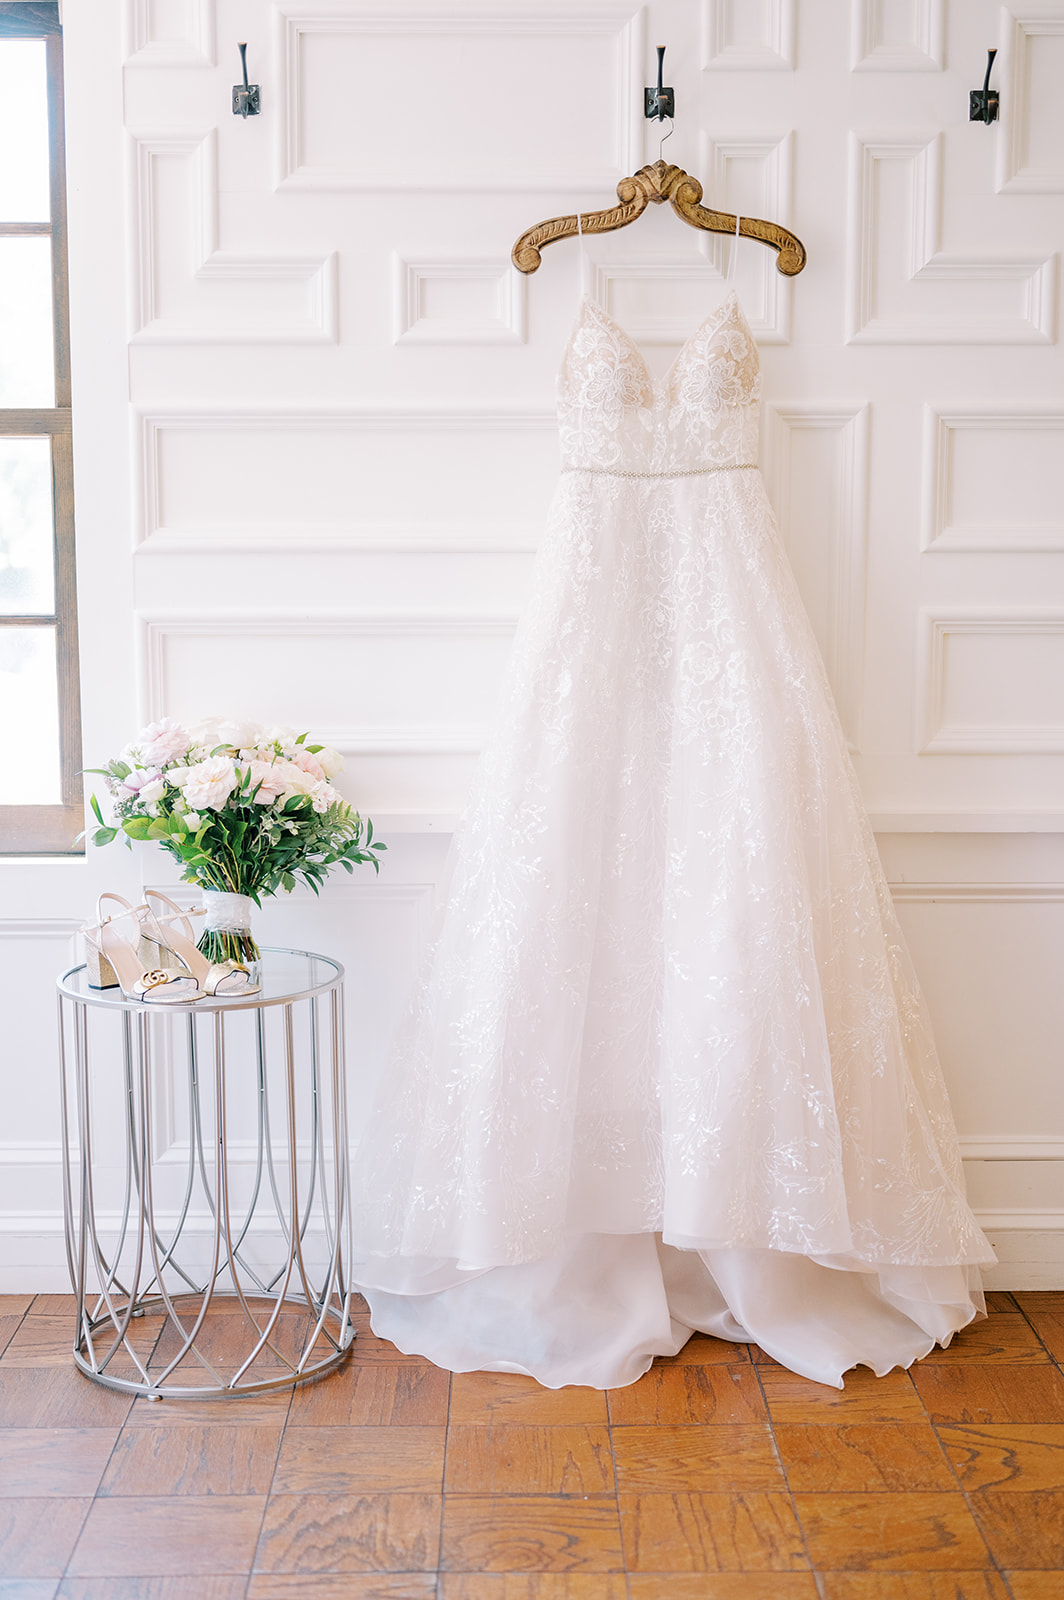 detail photo wedding dress hanging, hanger, bouquet, shoes